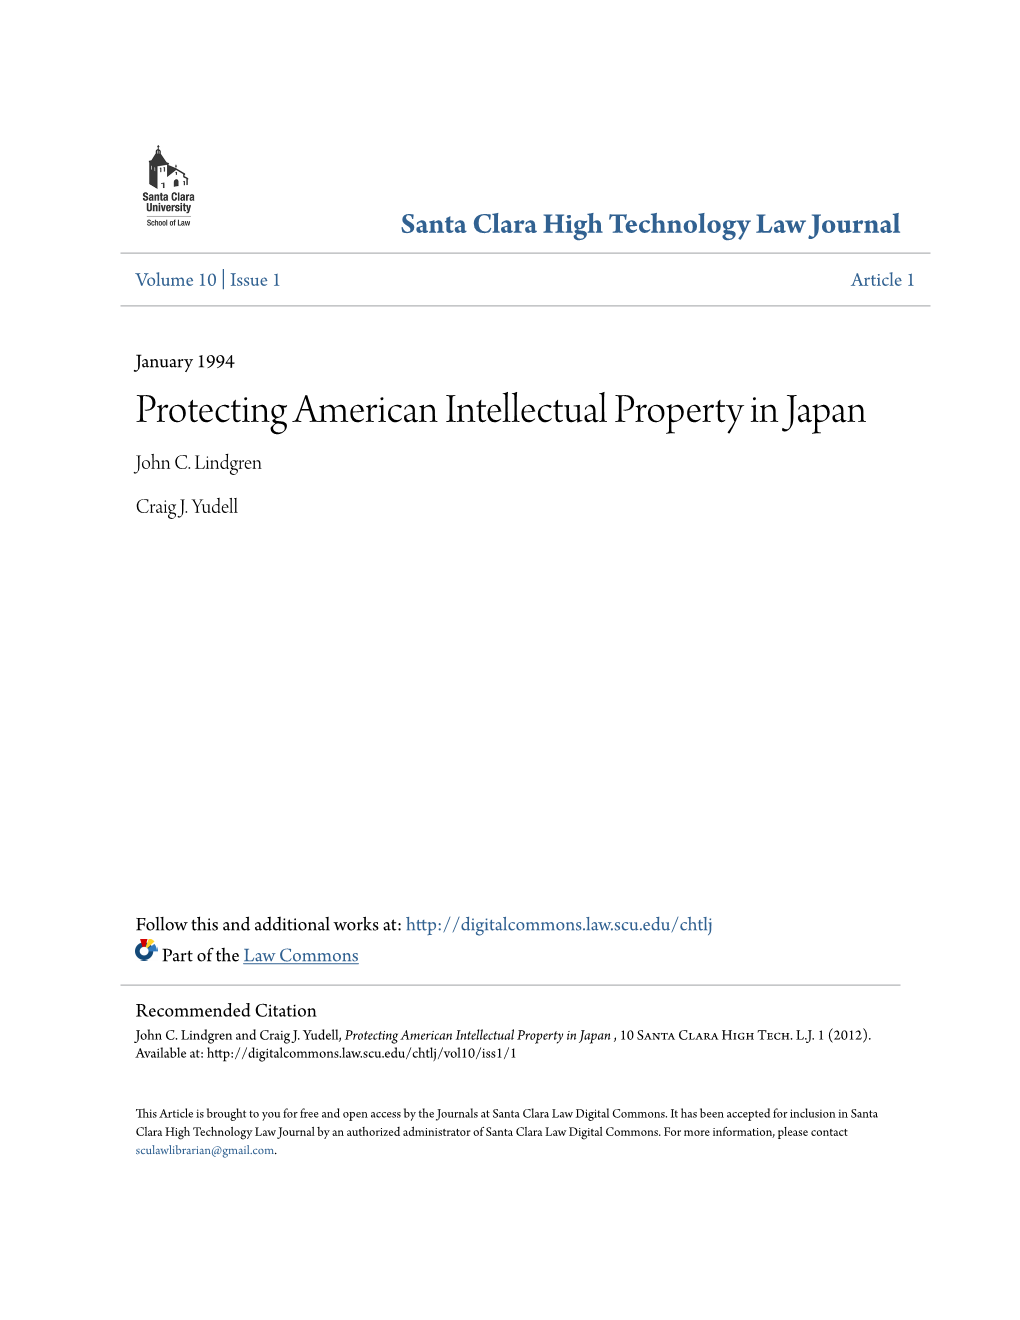 Protecting American Intellectual Property in Japan John C